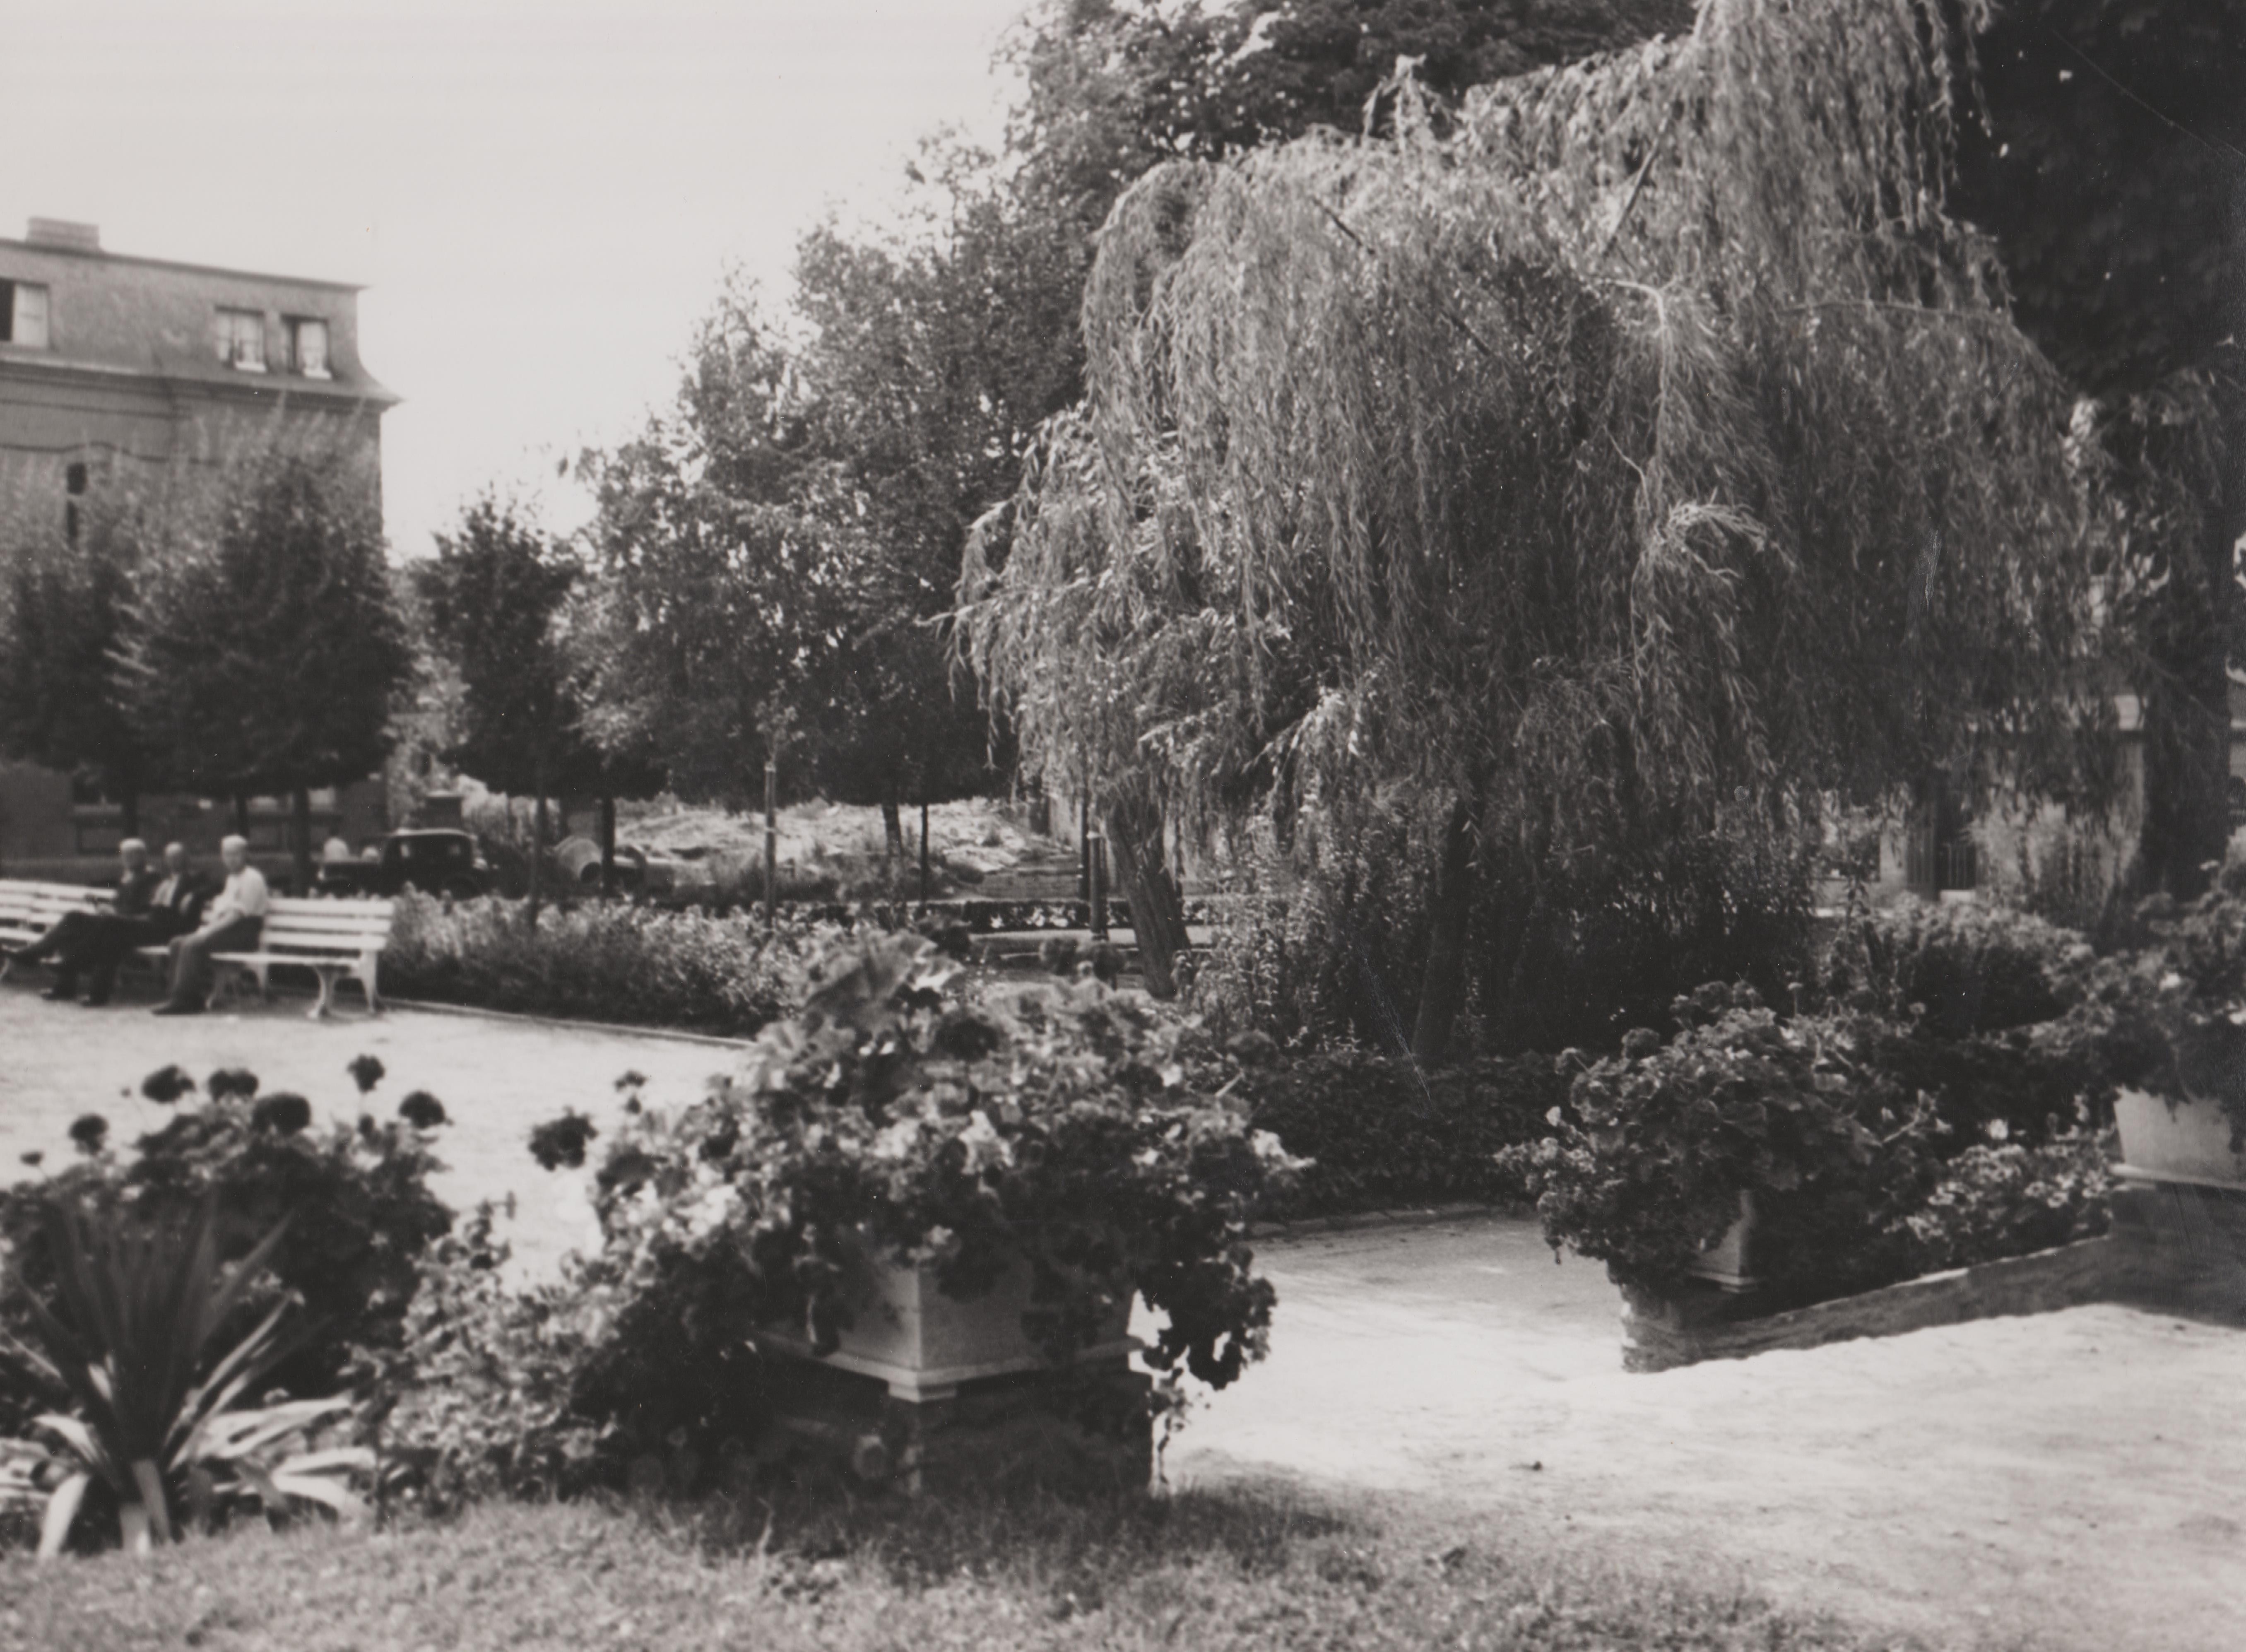 Stadtpark, Bendorf am Rhein 1950er Jahre (REM CC BY-NC-SA)